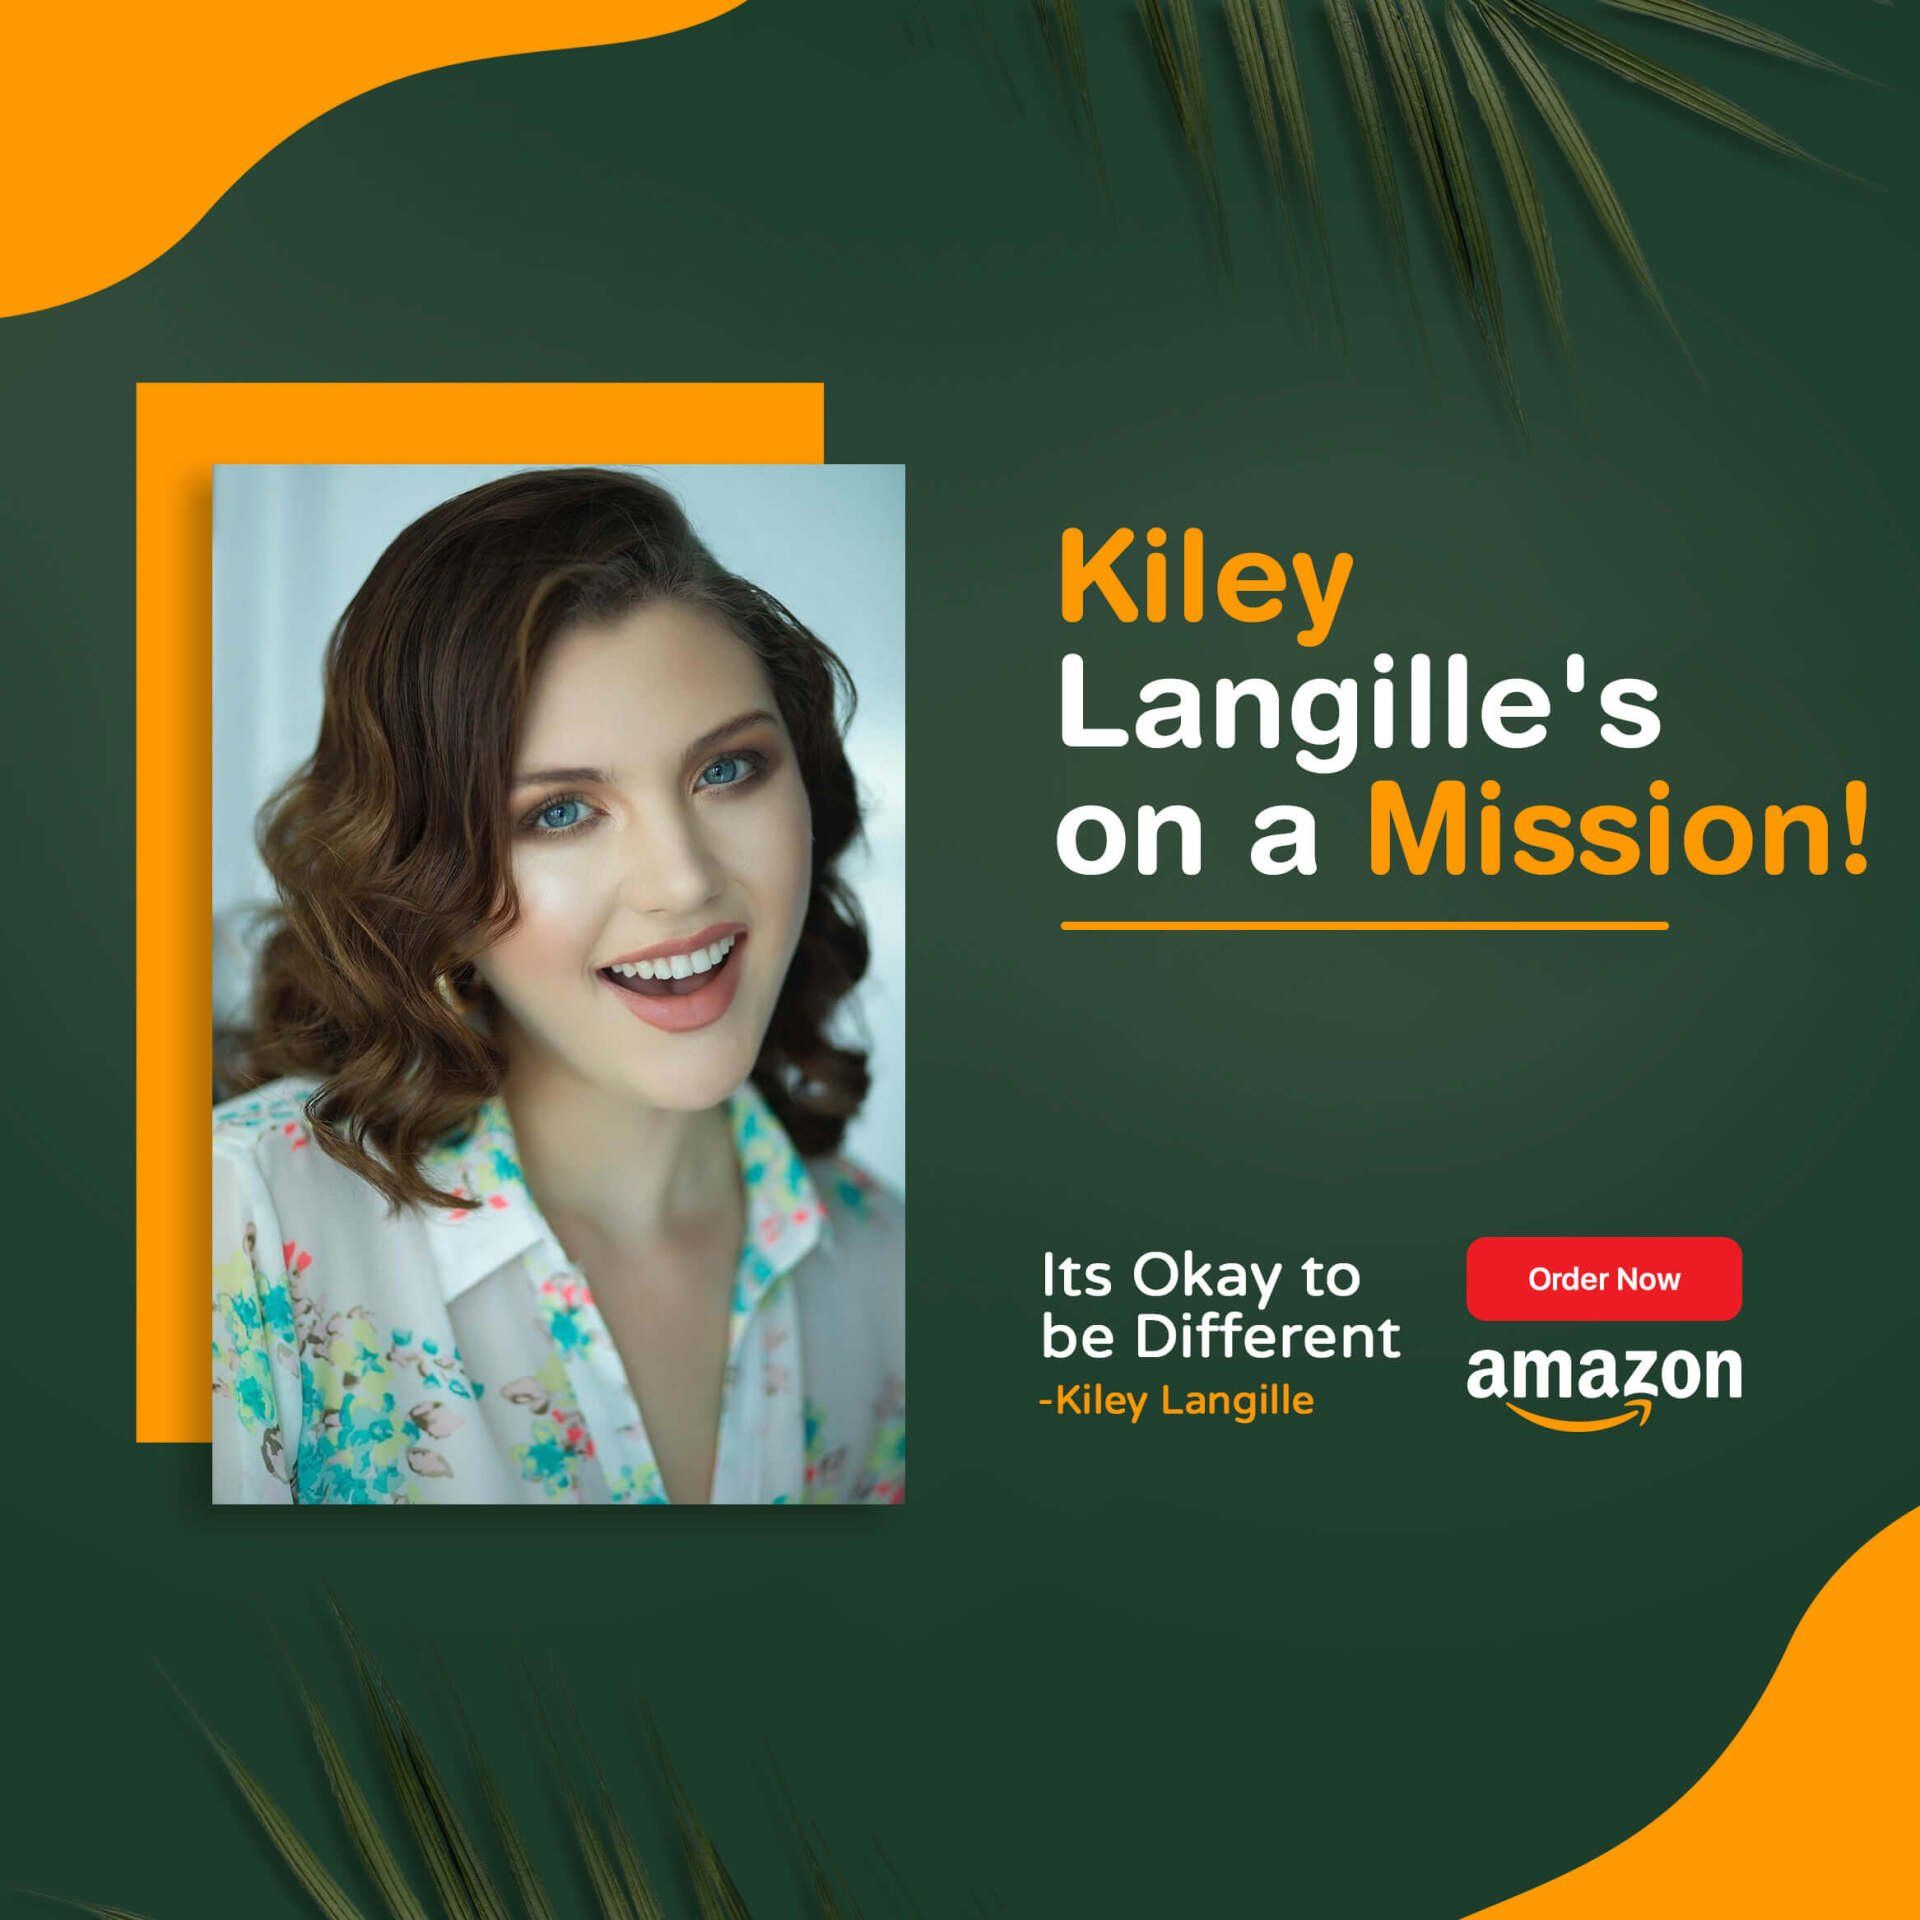 Kiley Langille’s on a Mission!